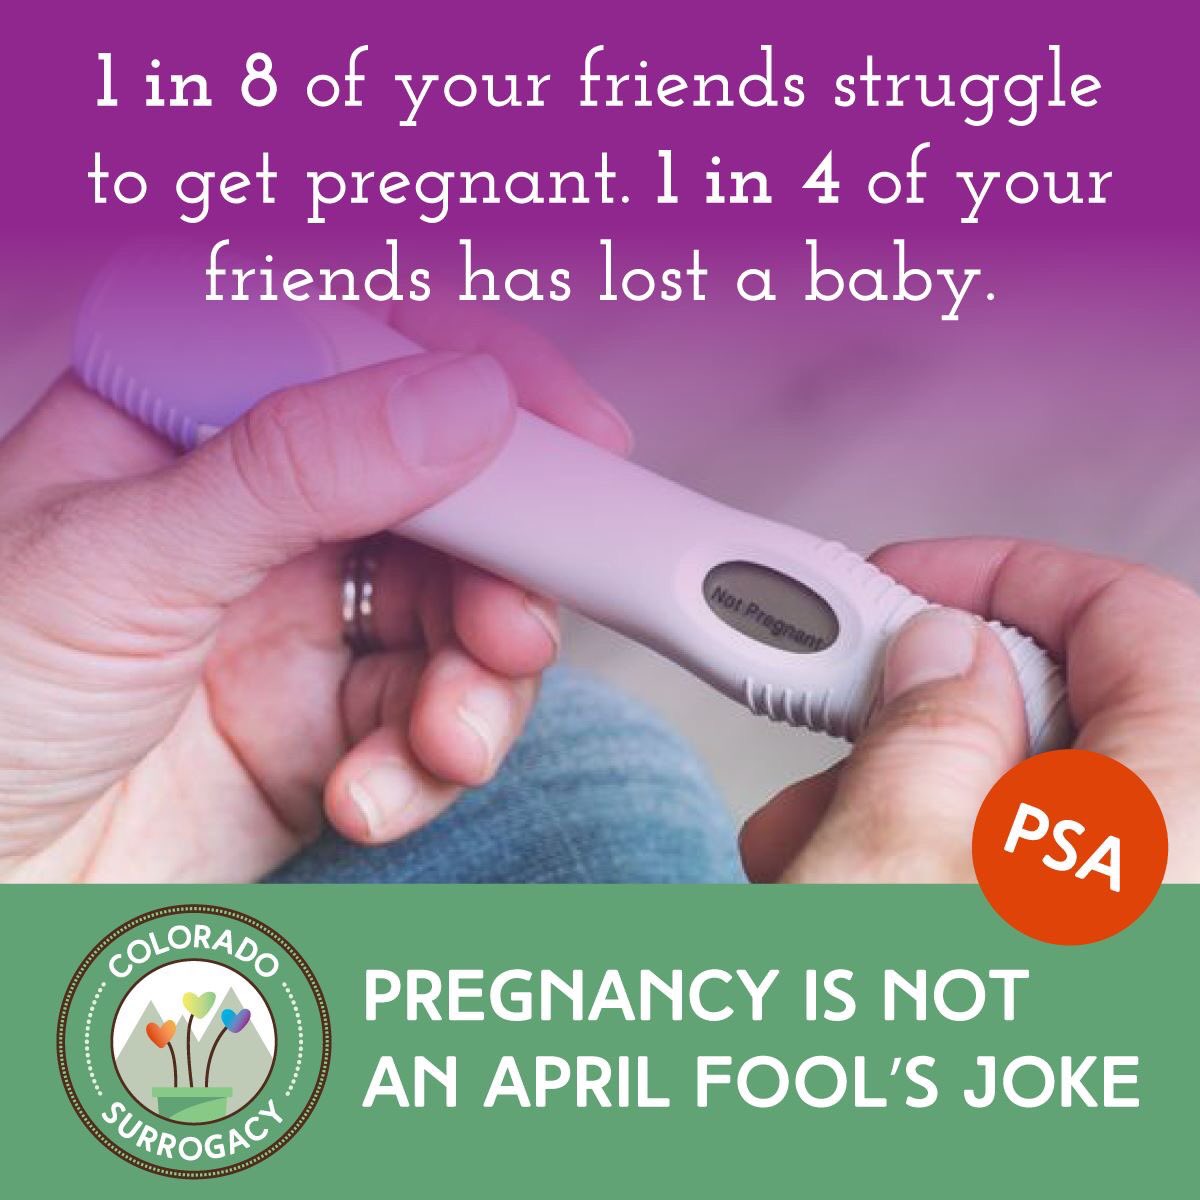 #IVFMyLife #Infertility #IVF #IUI #1in8 #MaleFactorInfertility #Endometriosis #PCOS #miscarriage #infertilityisnojoke #WhatIWishPeopleKnewAboutInfertility #AprilFoolsDay #AprilFoolsJoke #JustSayNo #pregnant #NotPregnant #Infertile